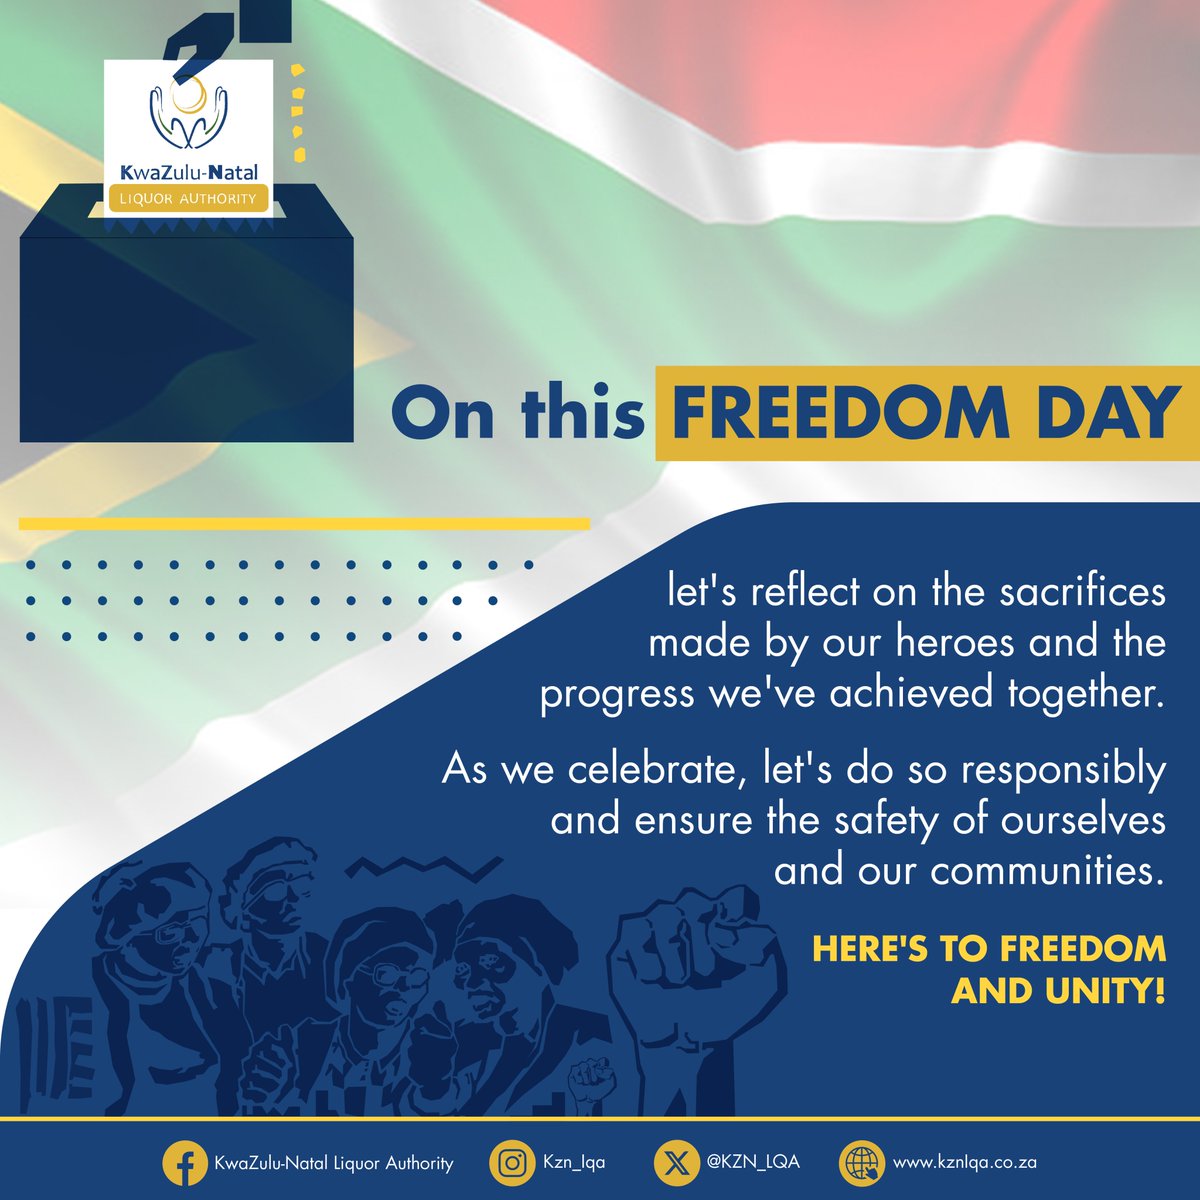 #FreedomDay
#KZNLiquorAuthority
#TradeAlcoholLegally
#DrinkResponsibly